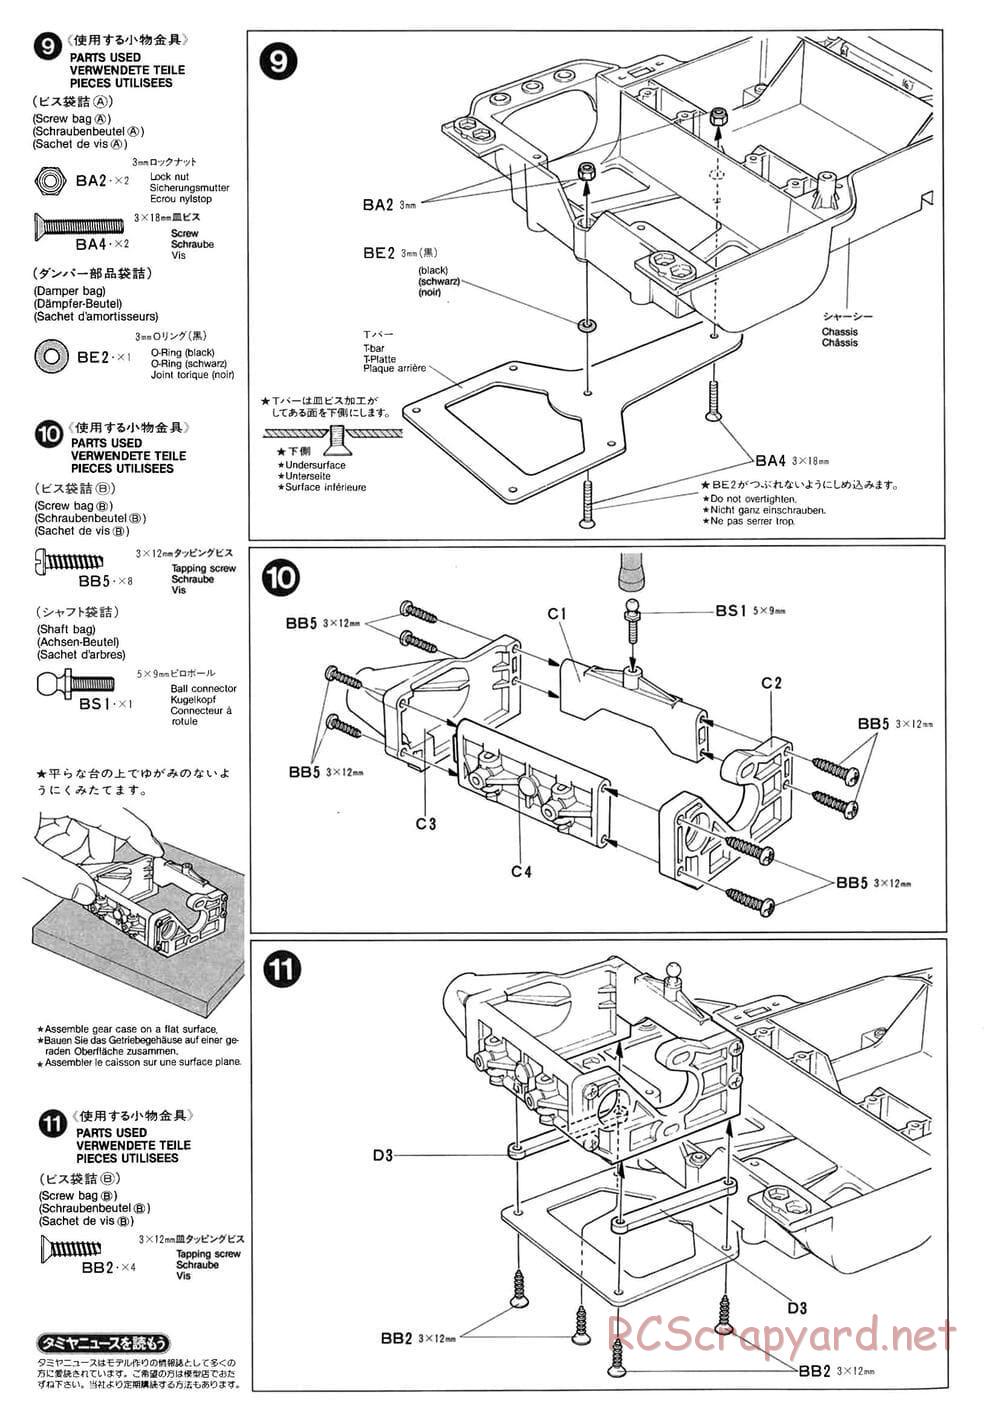 Tamiya - Group-C Chassis - Manual - Page 8